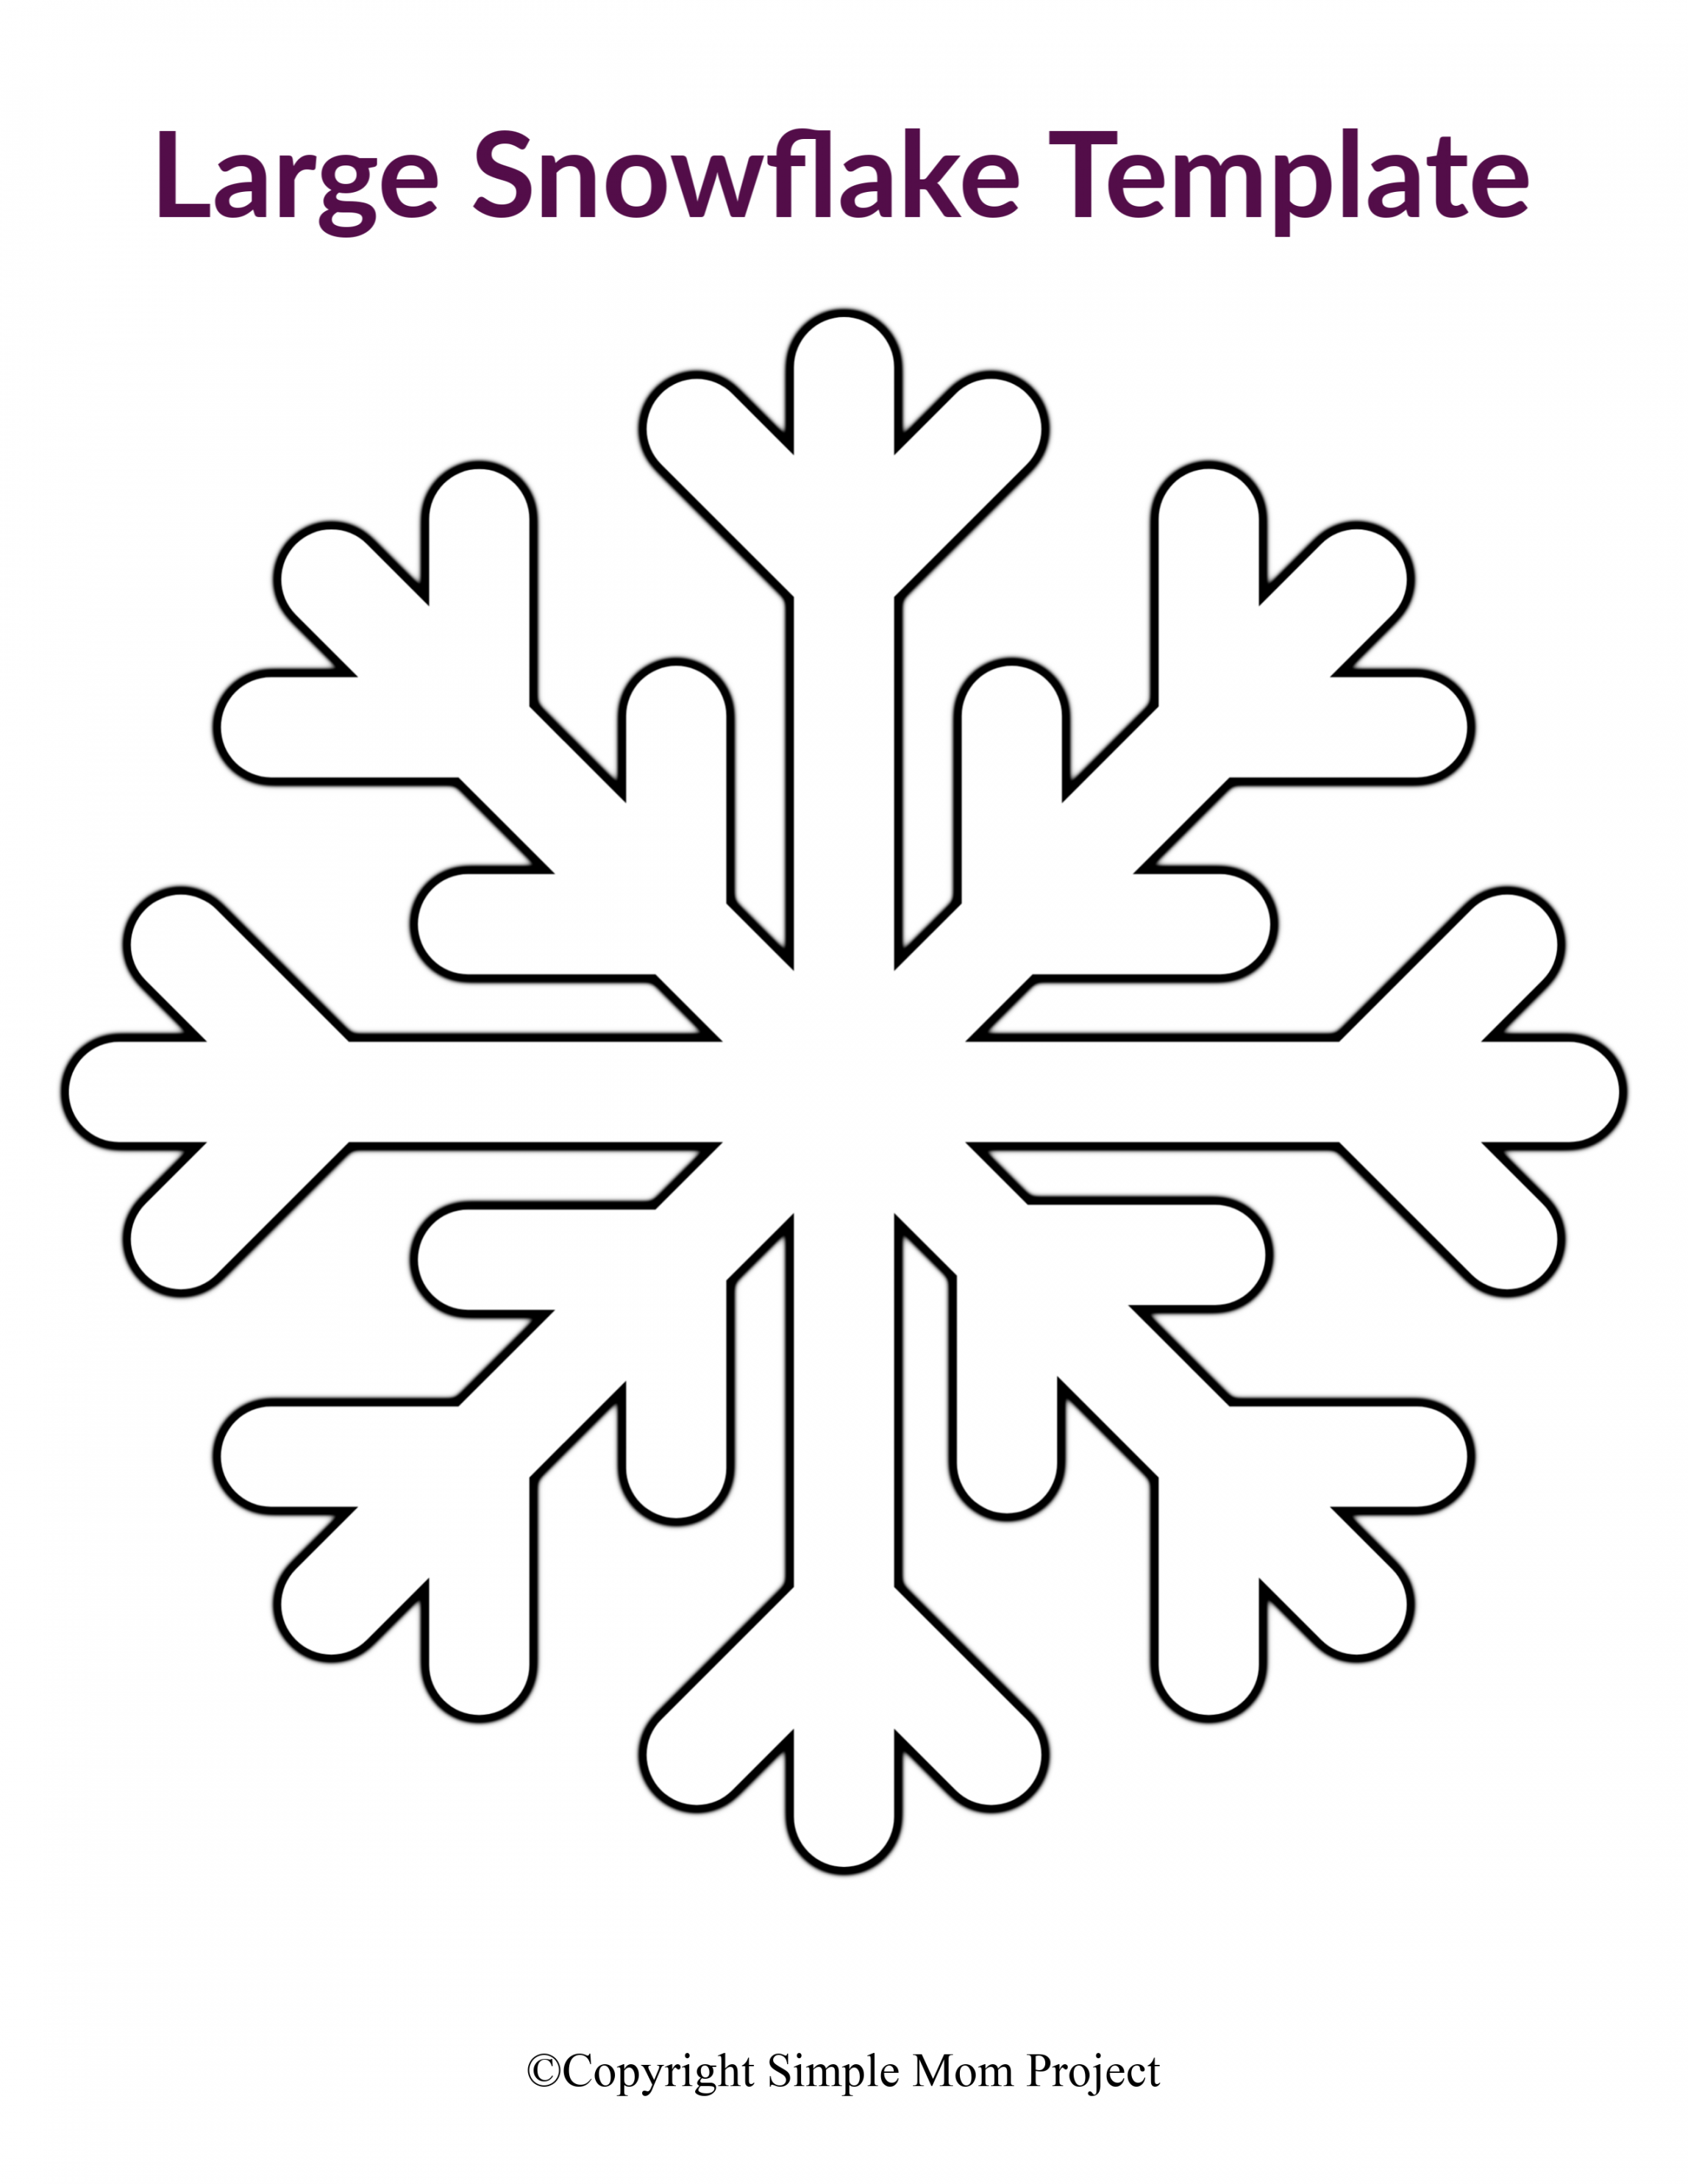 Free Printable Large Snowflake Templates - Simple Mom Project - FREE Printables - Snowflake Template Free Printable